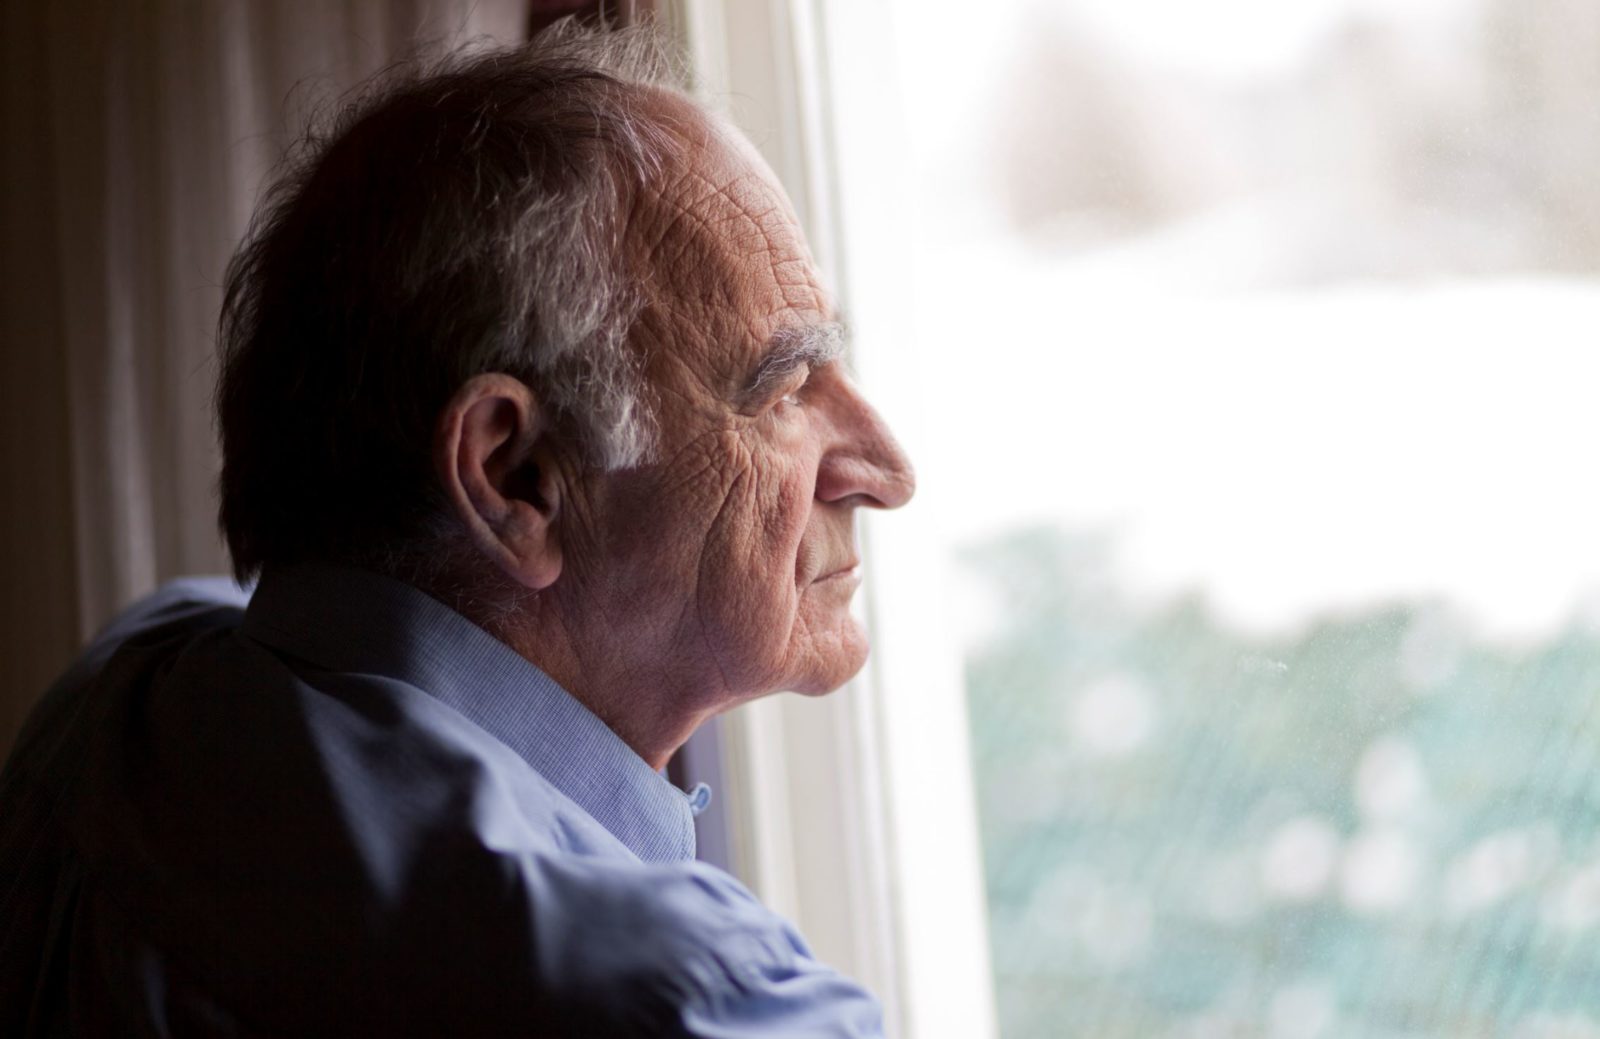 older man looks sad as he gazes out the window